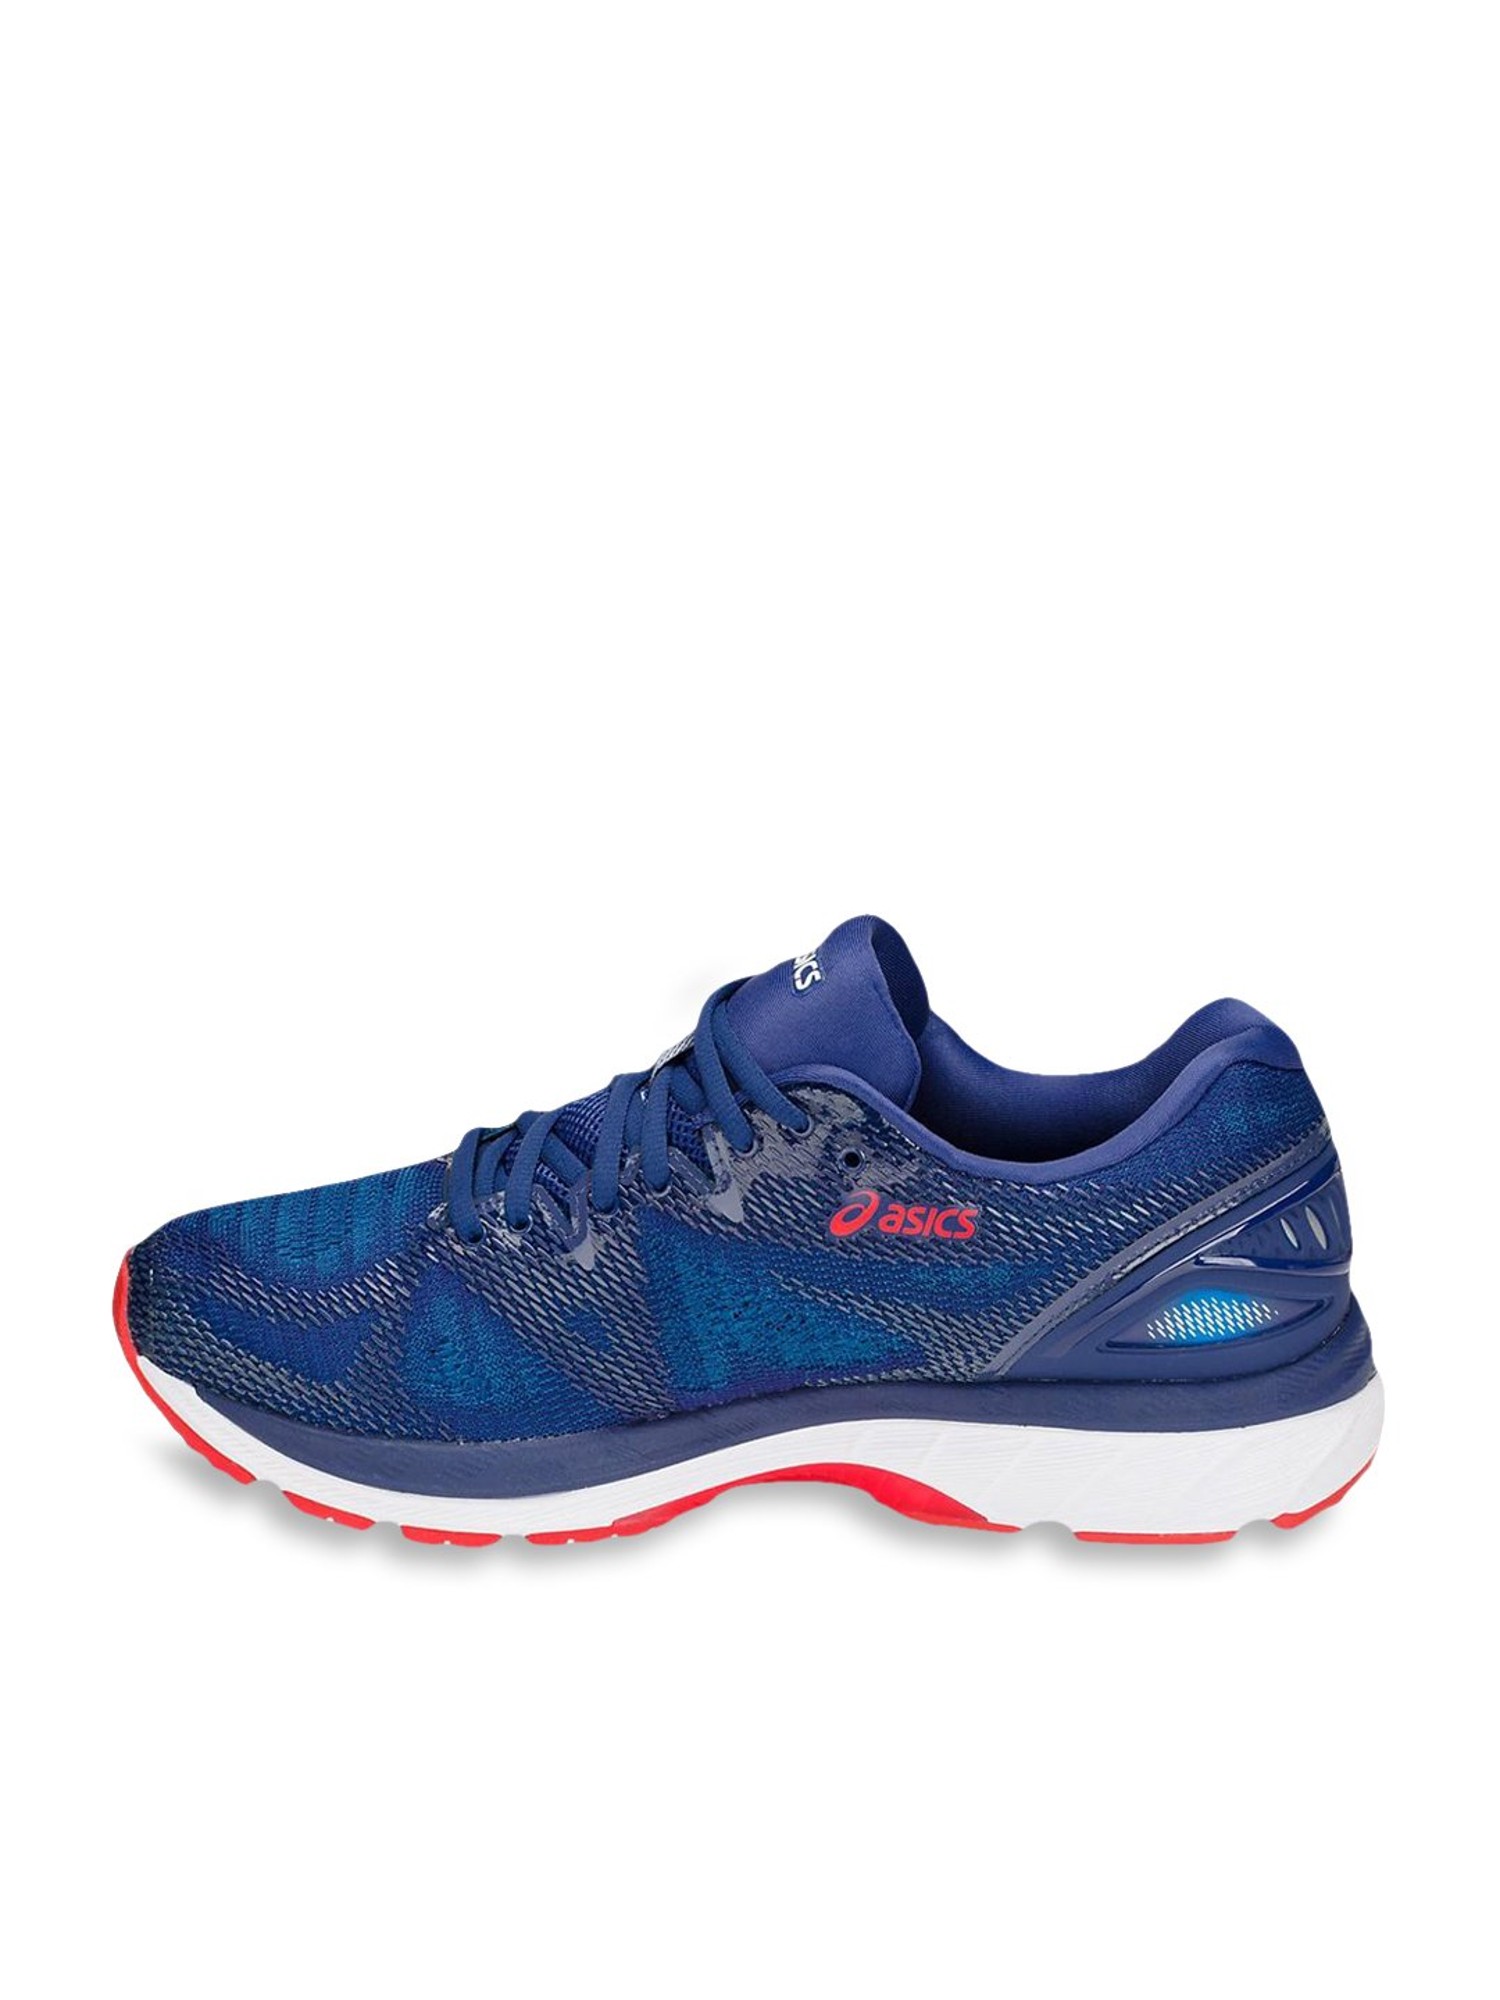 Asics Gel-nimbus 20 Blue Running Shoes 